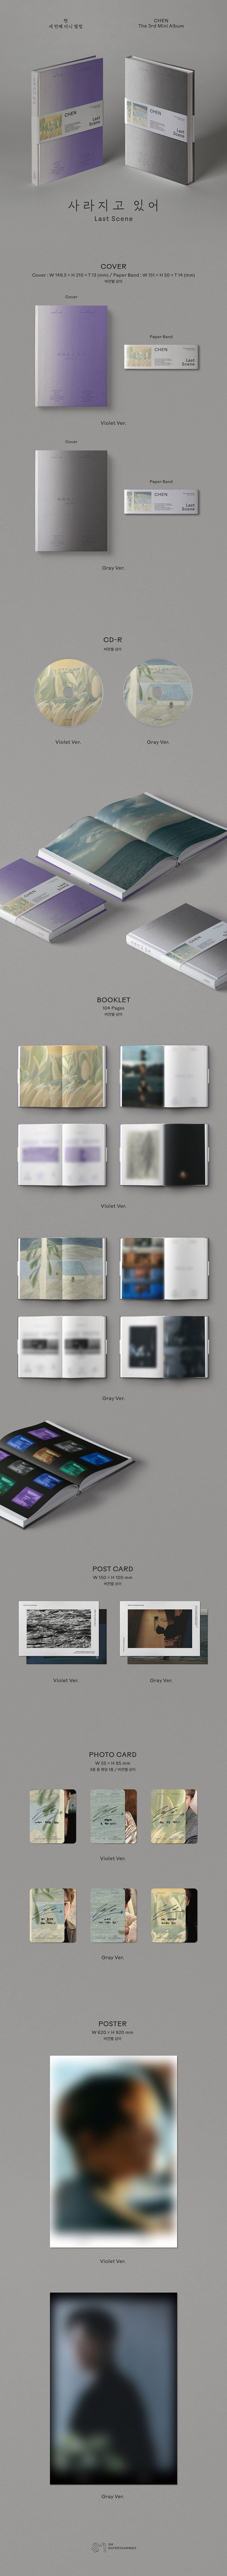 CHEN - المشهد الأخير (الألبوم المصغر الثالث) Photobook Ver. | شركة ديباك